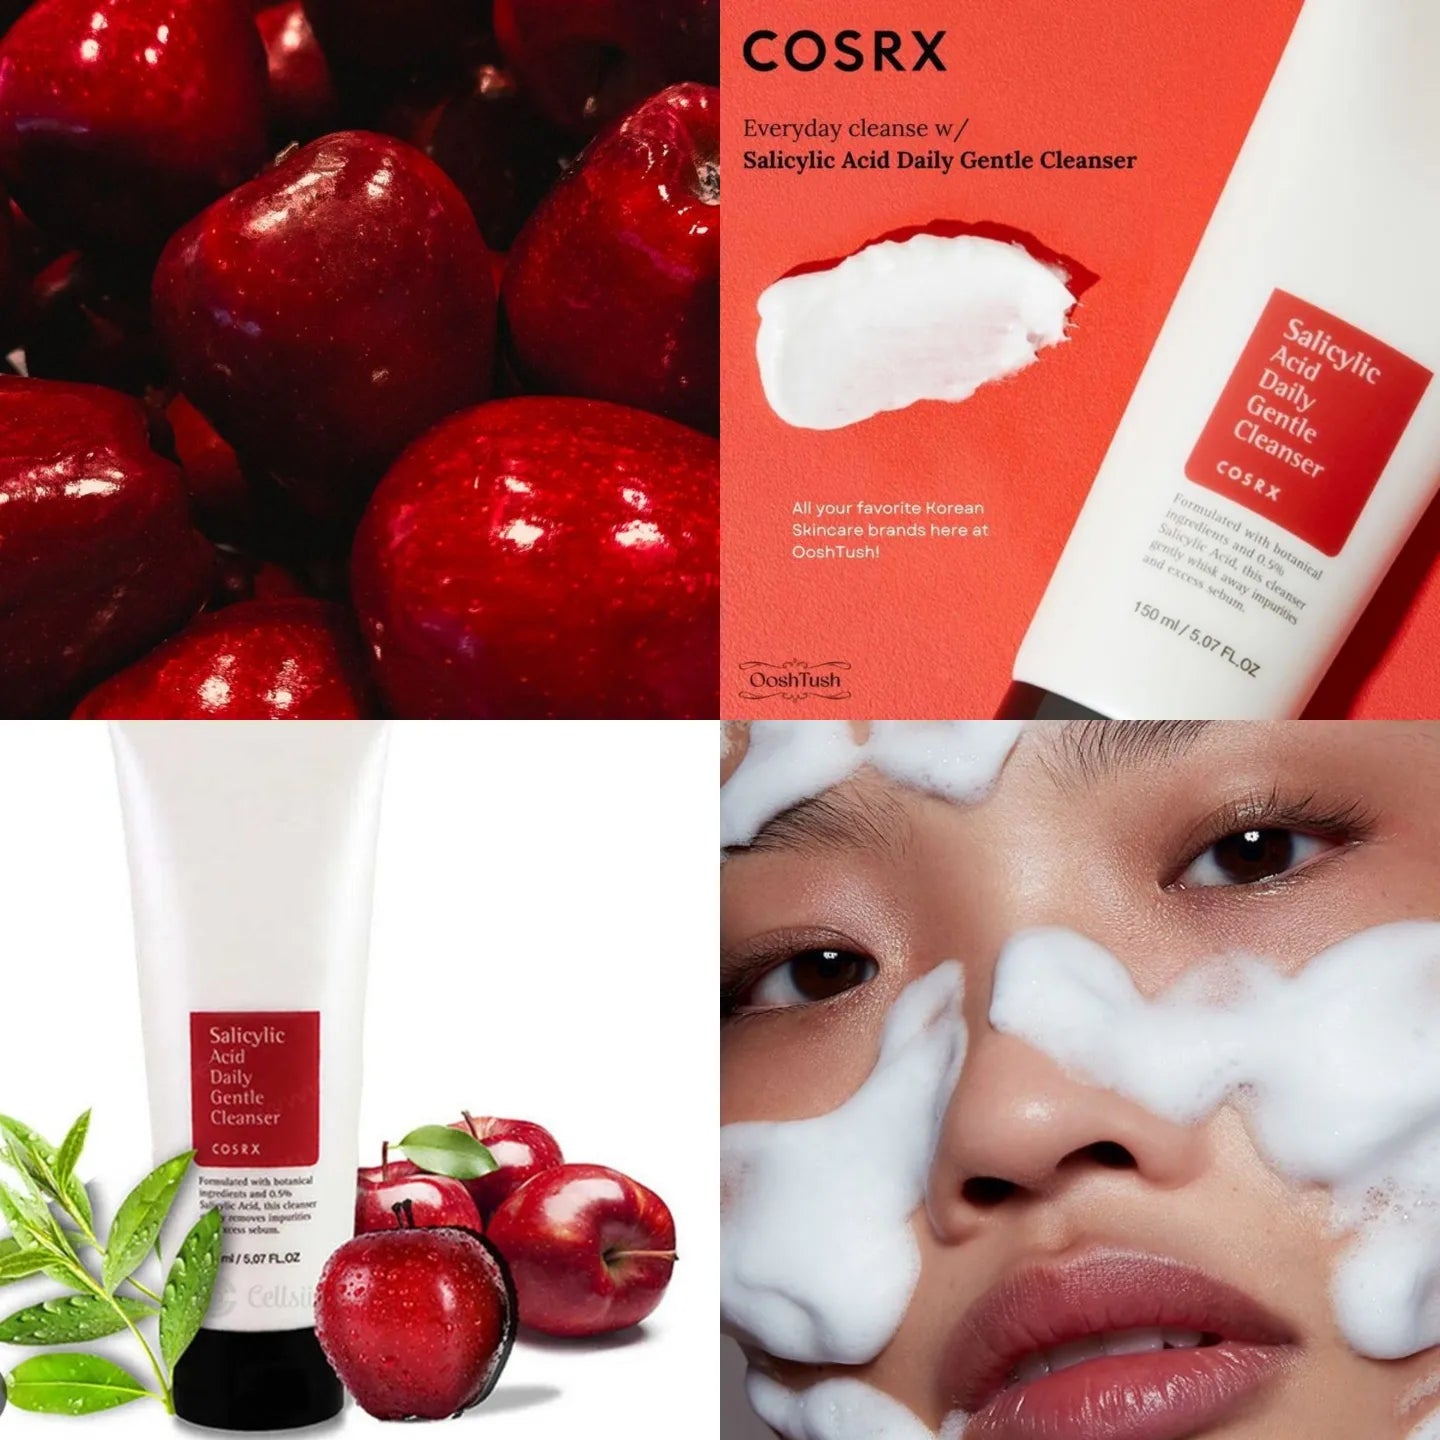 Cosrx salicylic acid daily gentle cleanser 🍎🌿غسول المعجزة الرغوي بالتفاح الاحمر للبثور والحبوب الملتهبة🍎